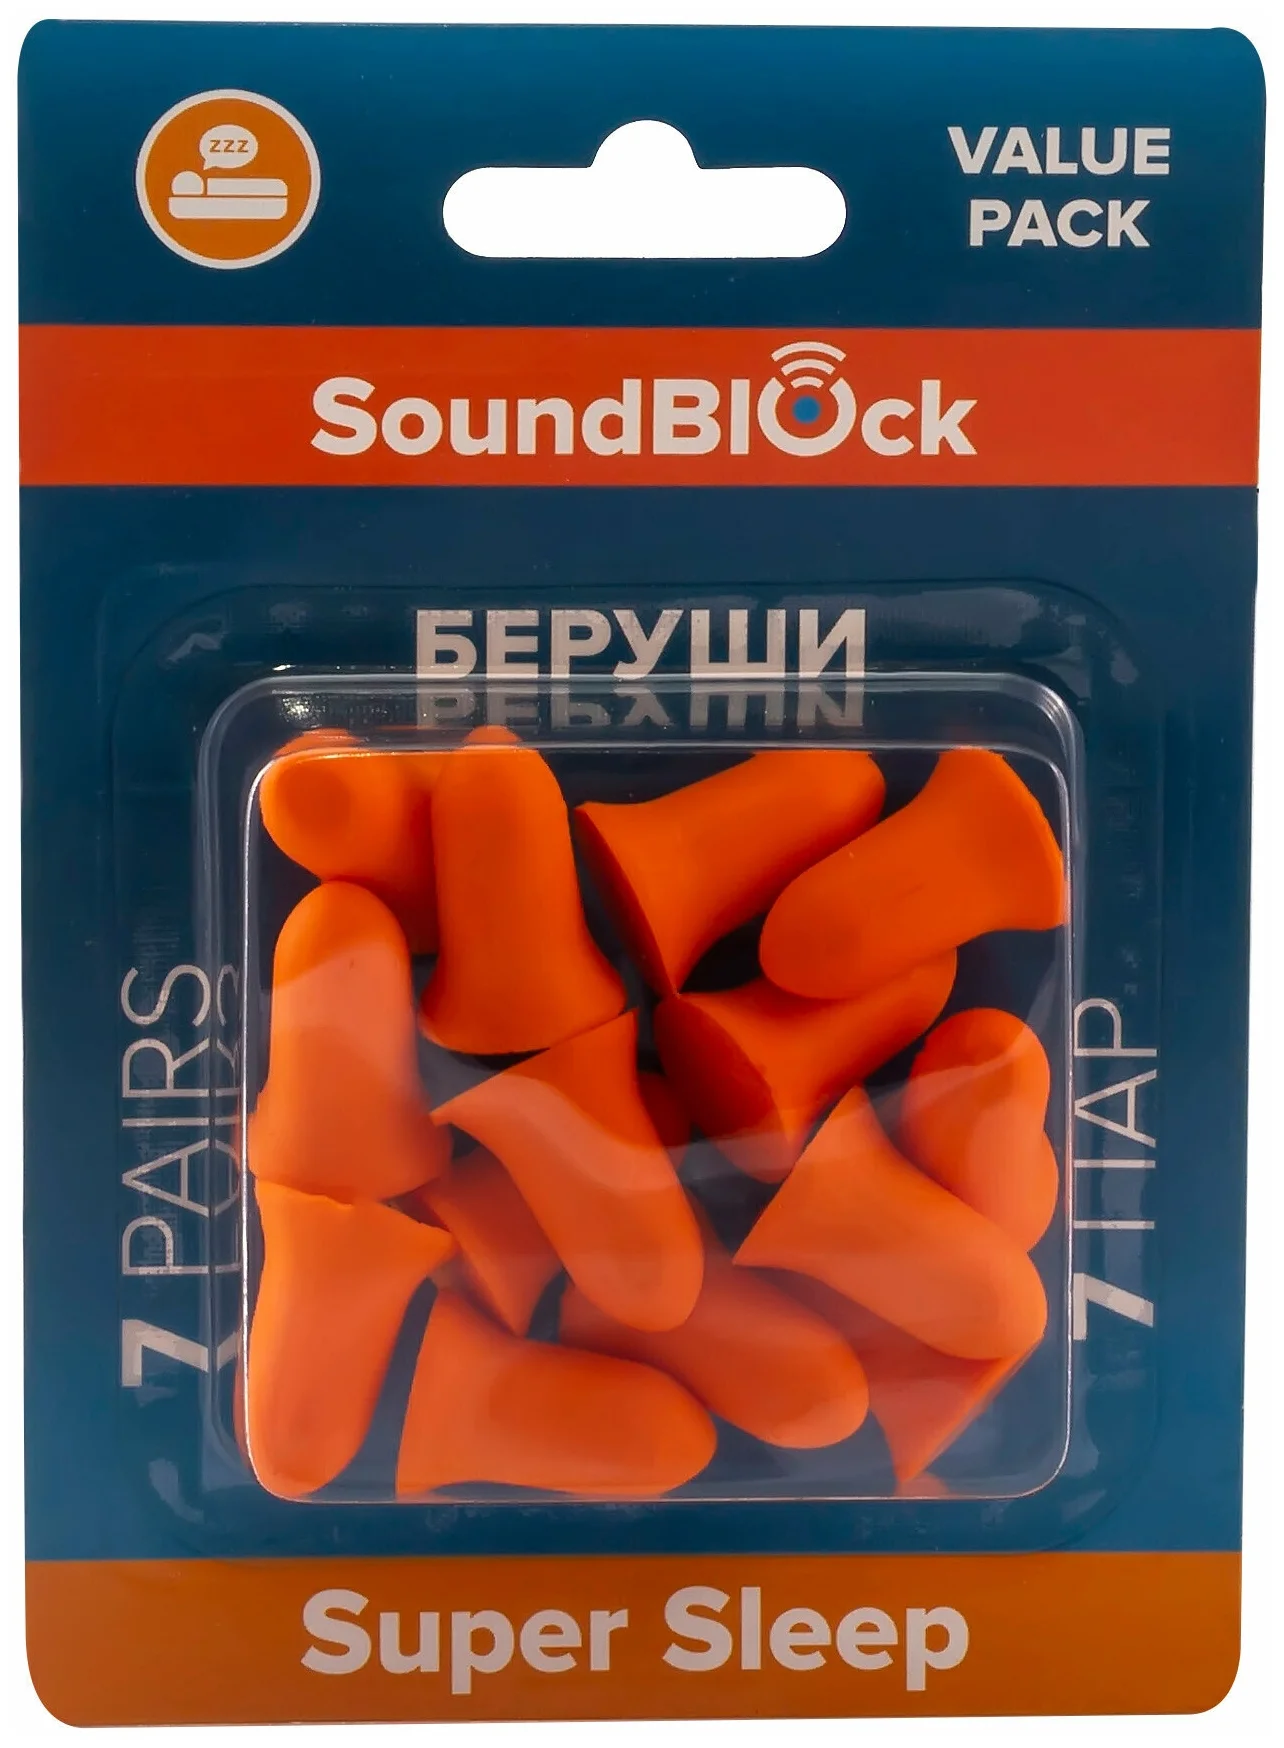 Soundblock Value Pack (Пенные беруши), 7 пар/уп